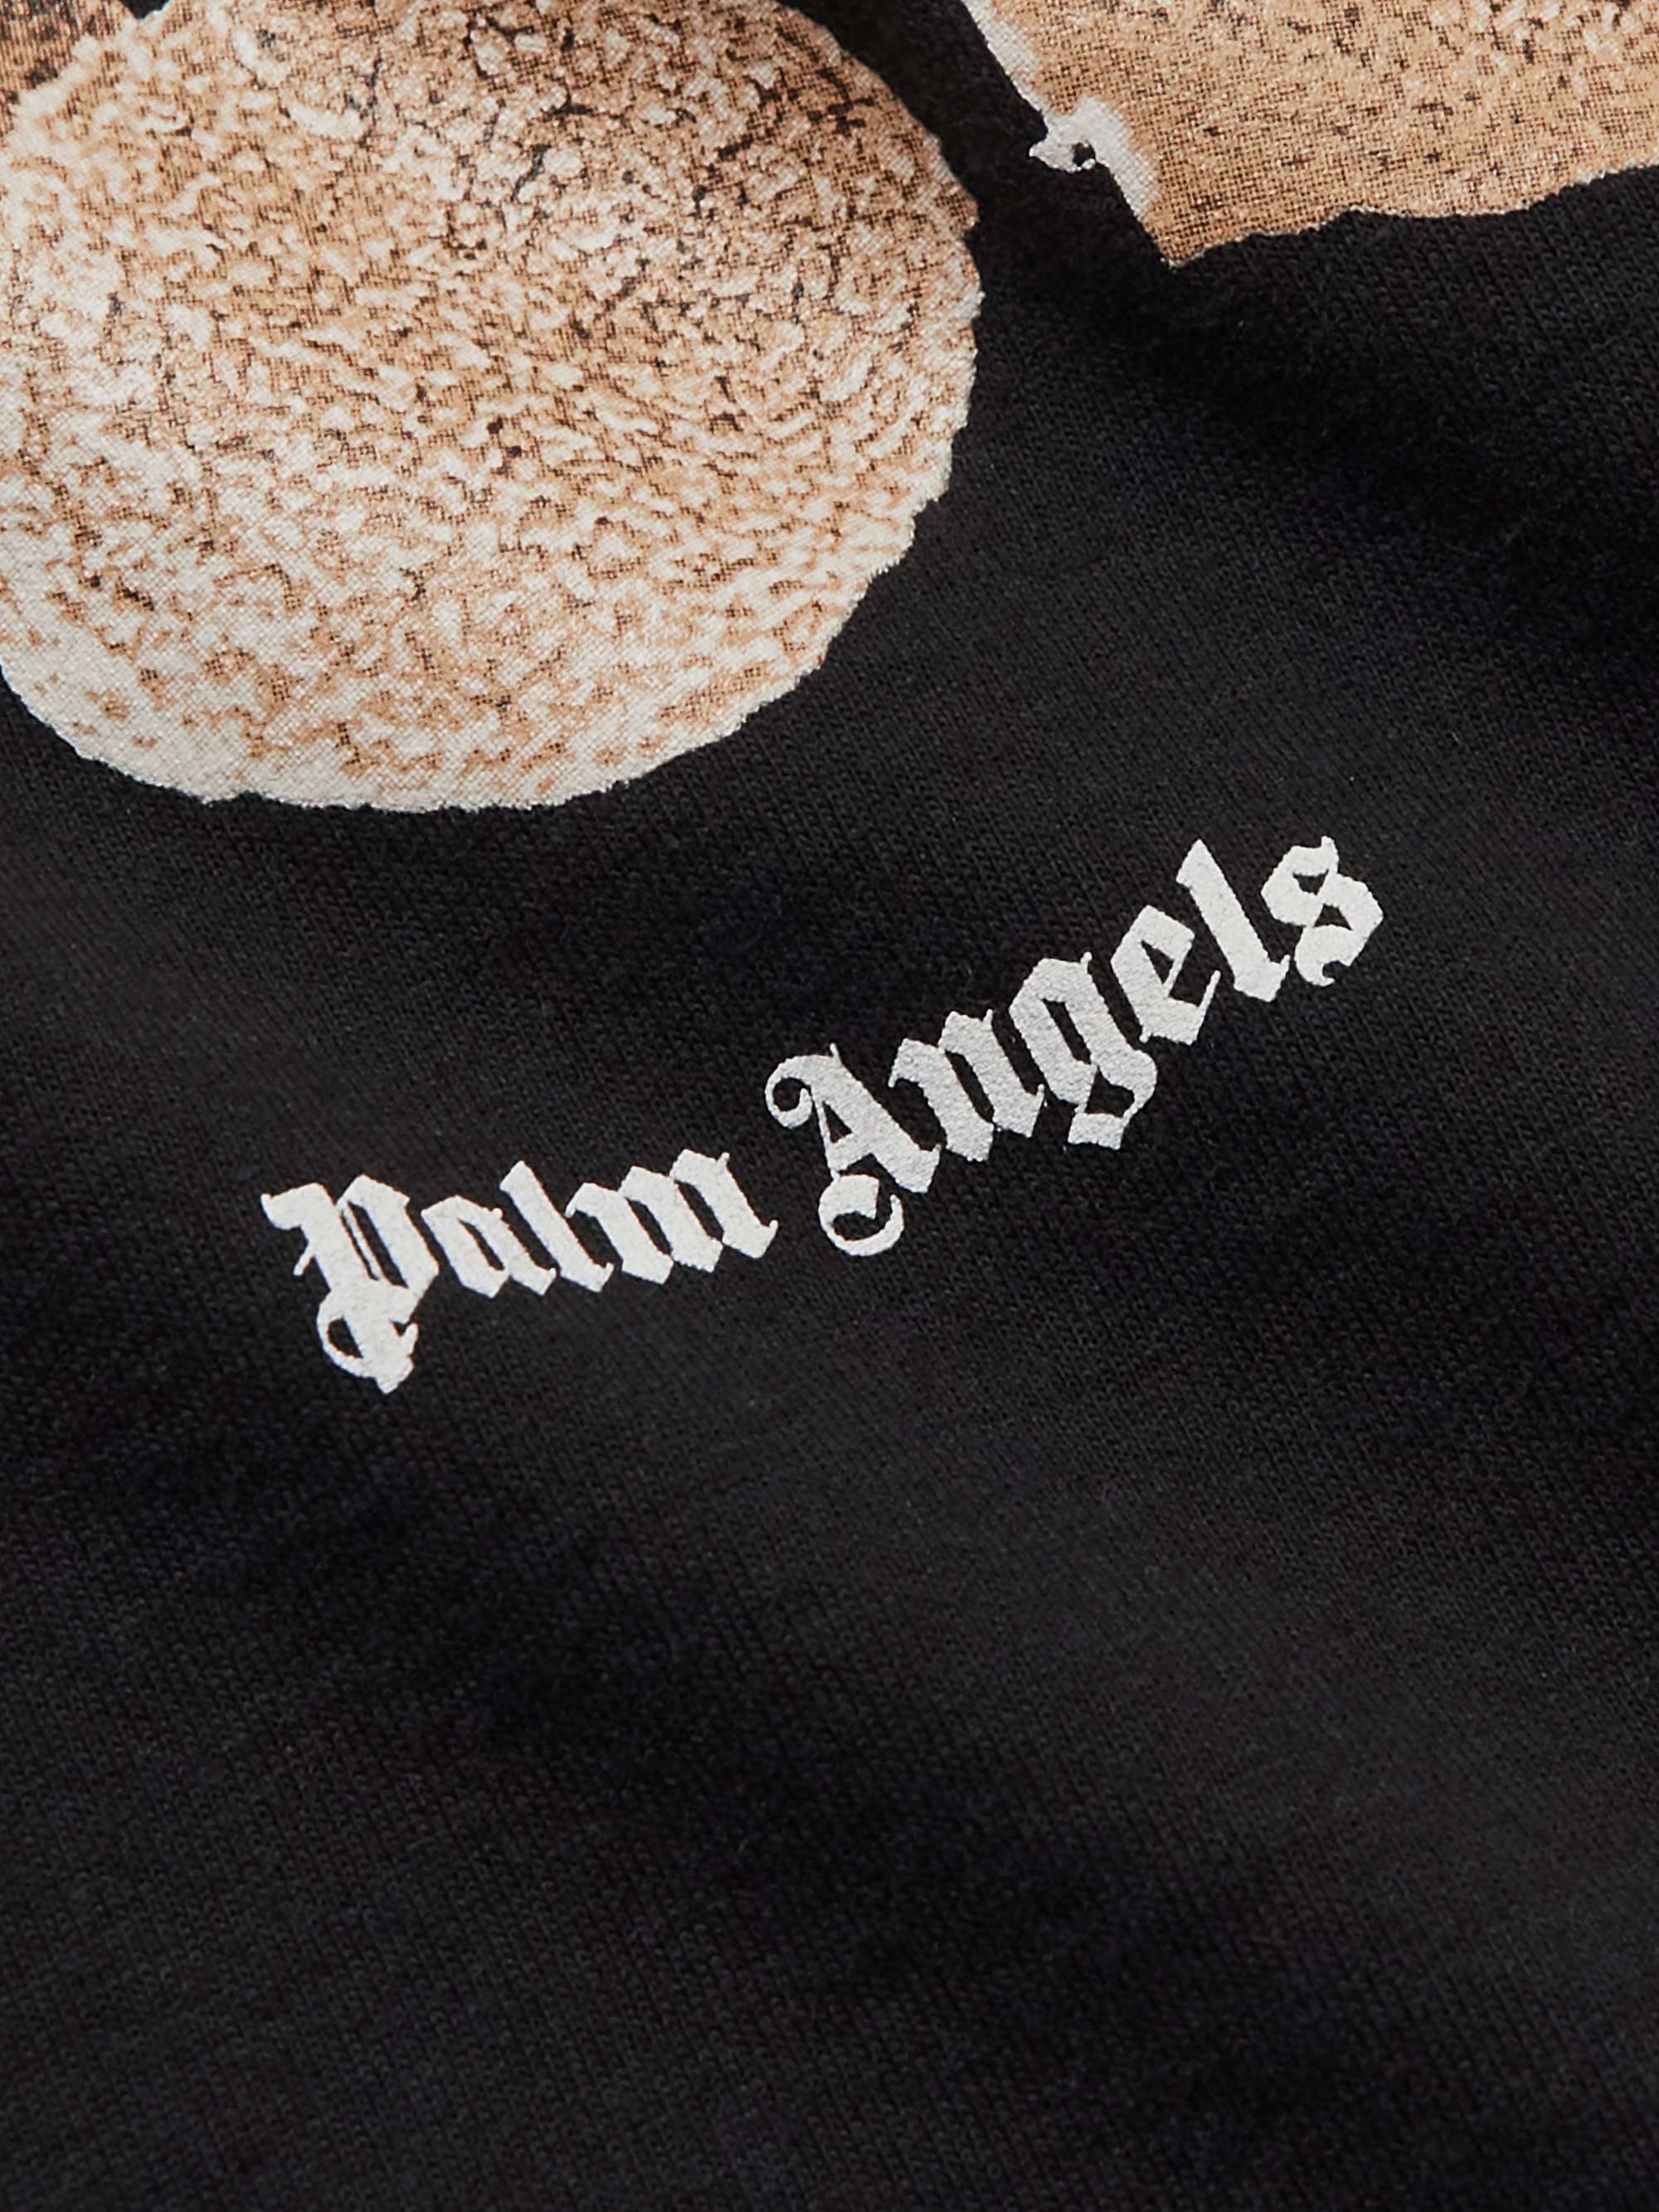 PALM ANGELS KIDS Logo-Print Cotton-Jersey T-Shirt